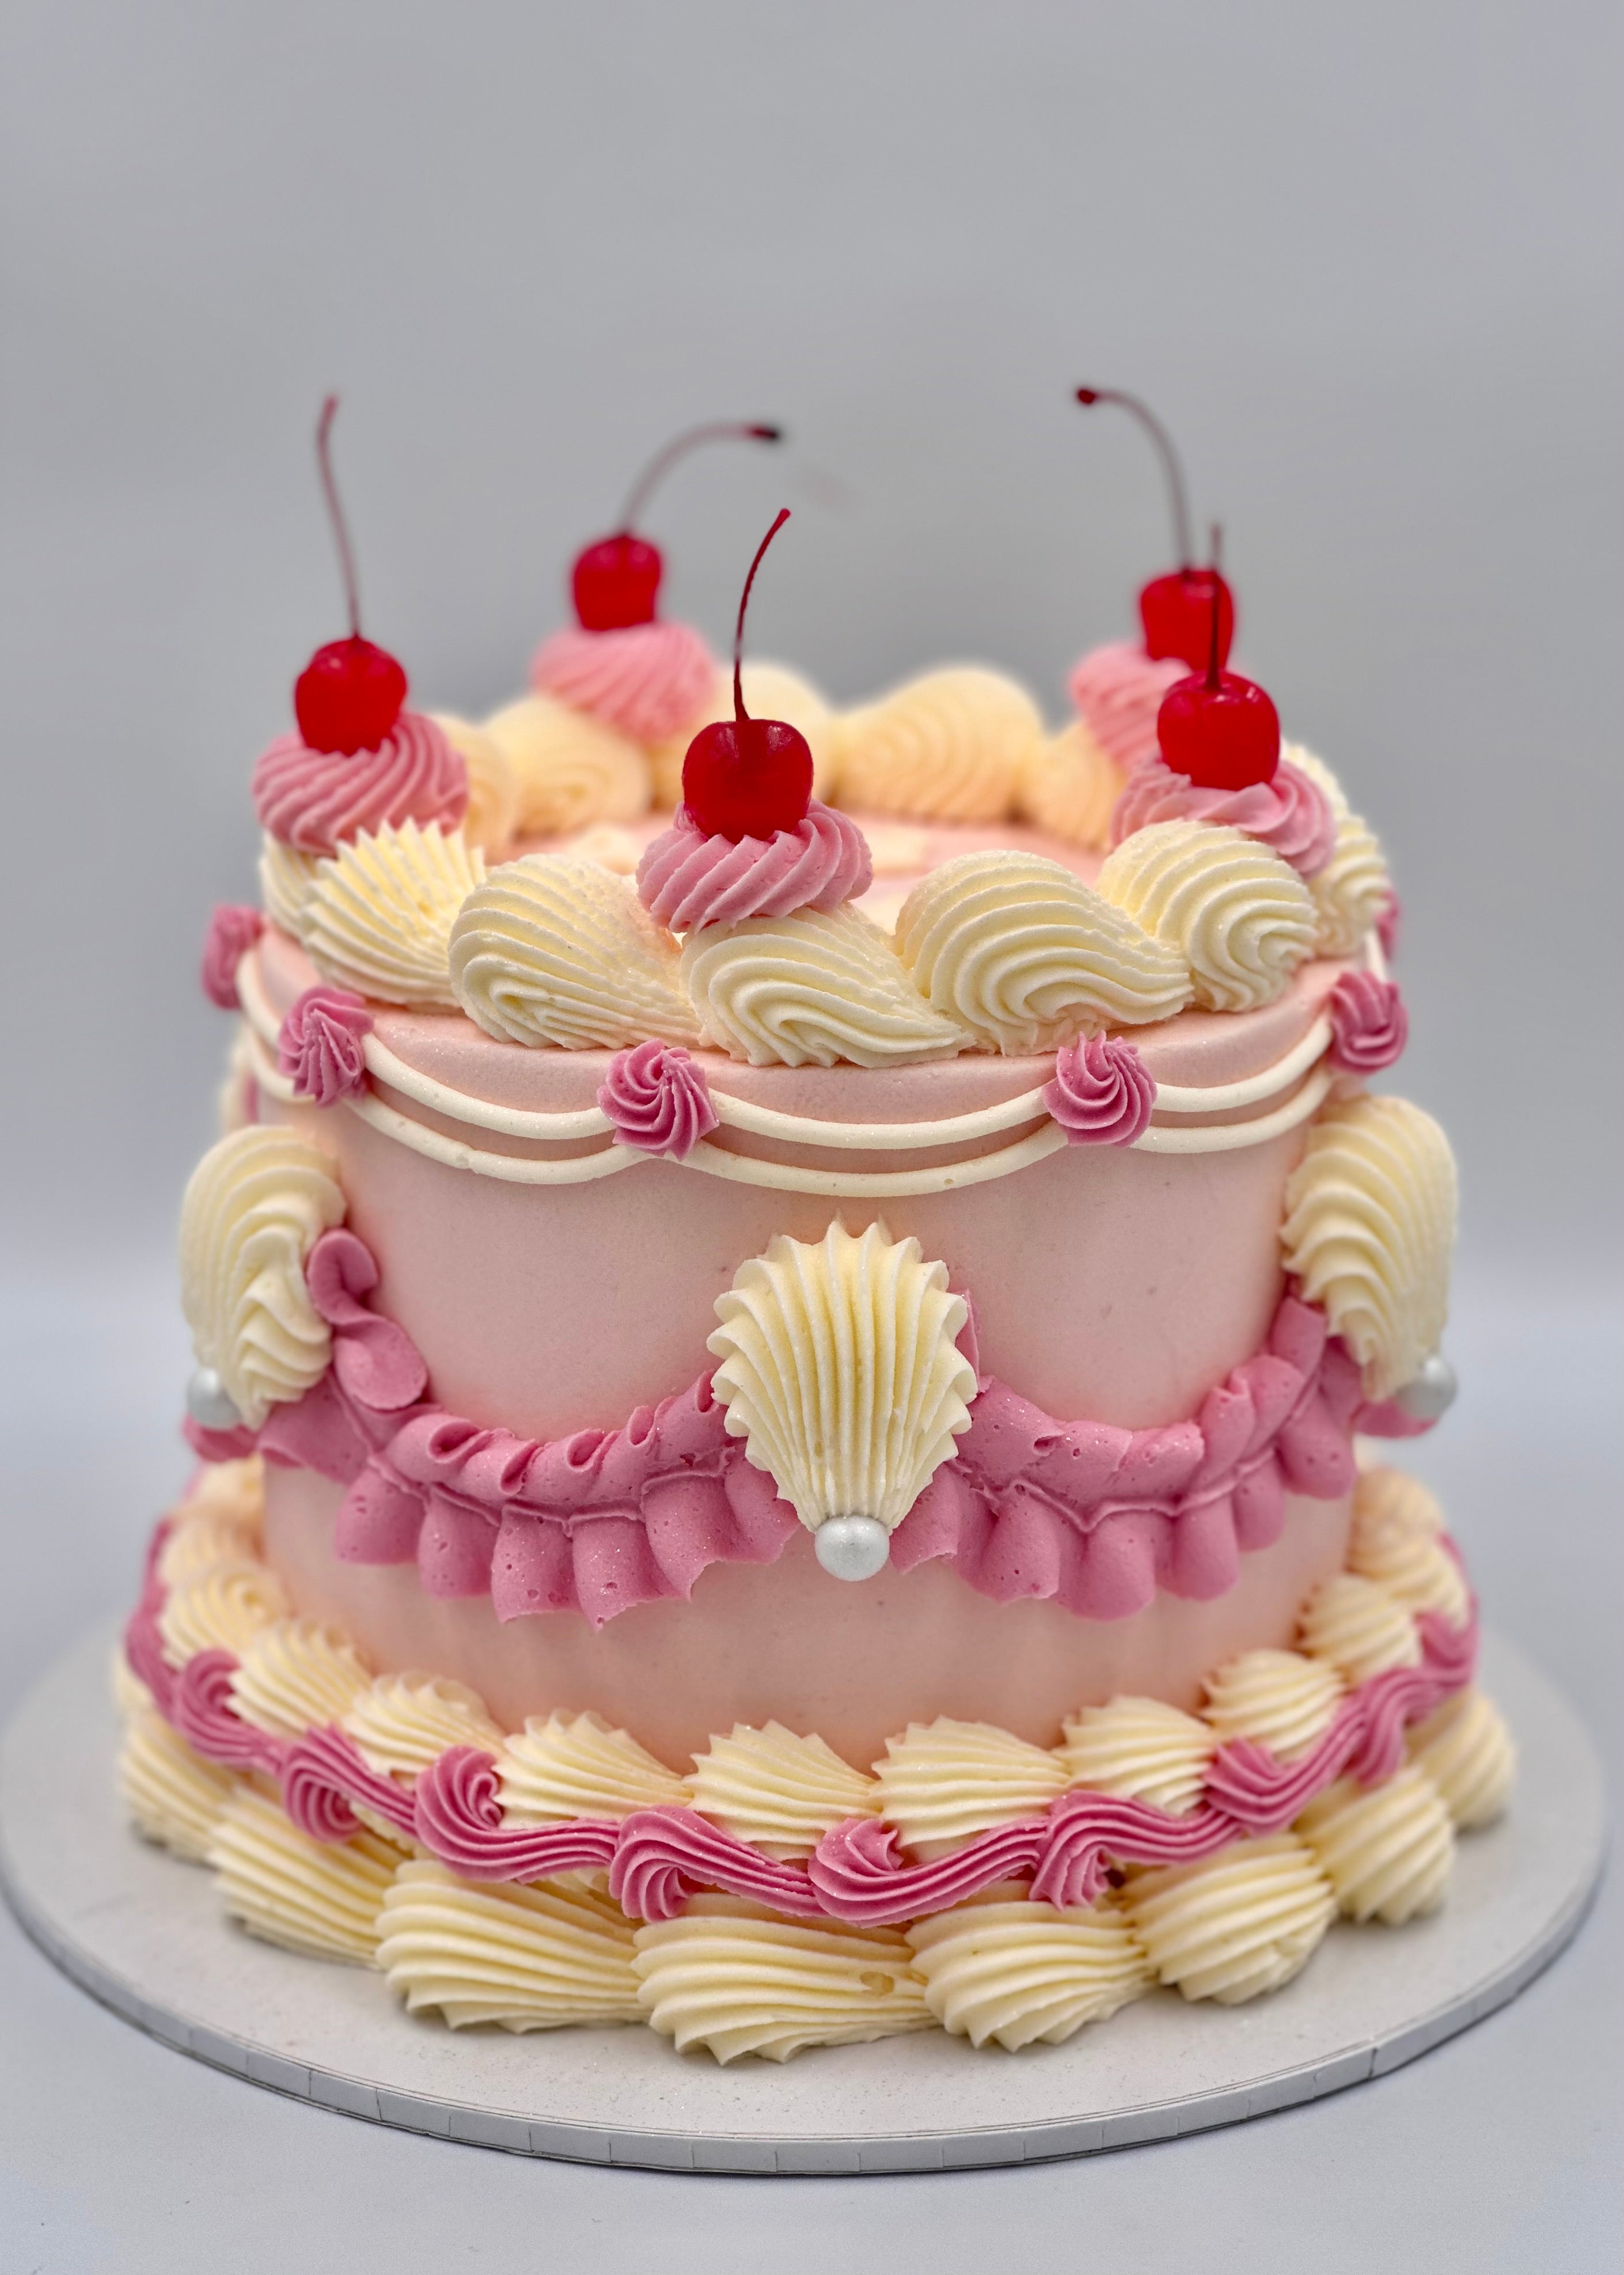 pretty birthday cakes Archives - Cakey Goodness